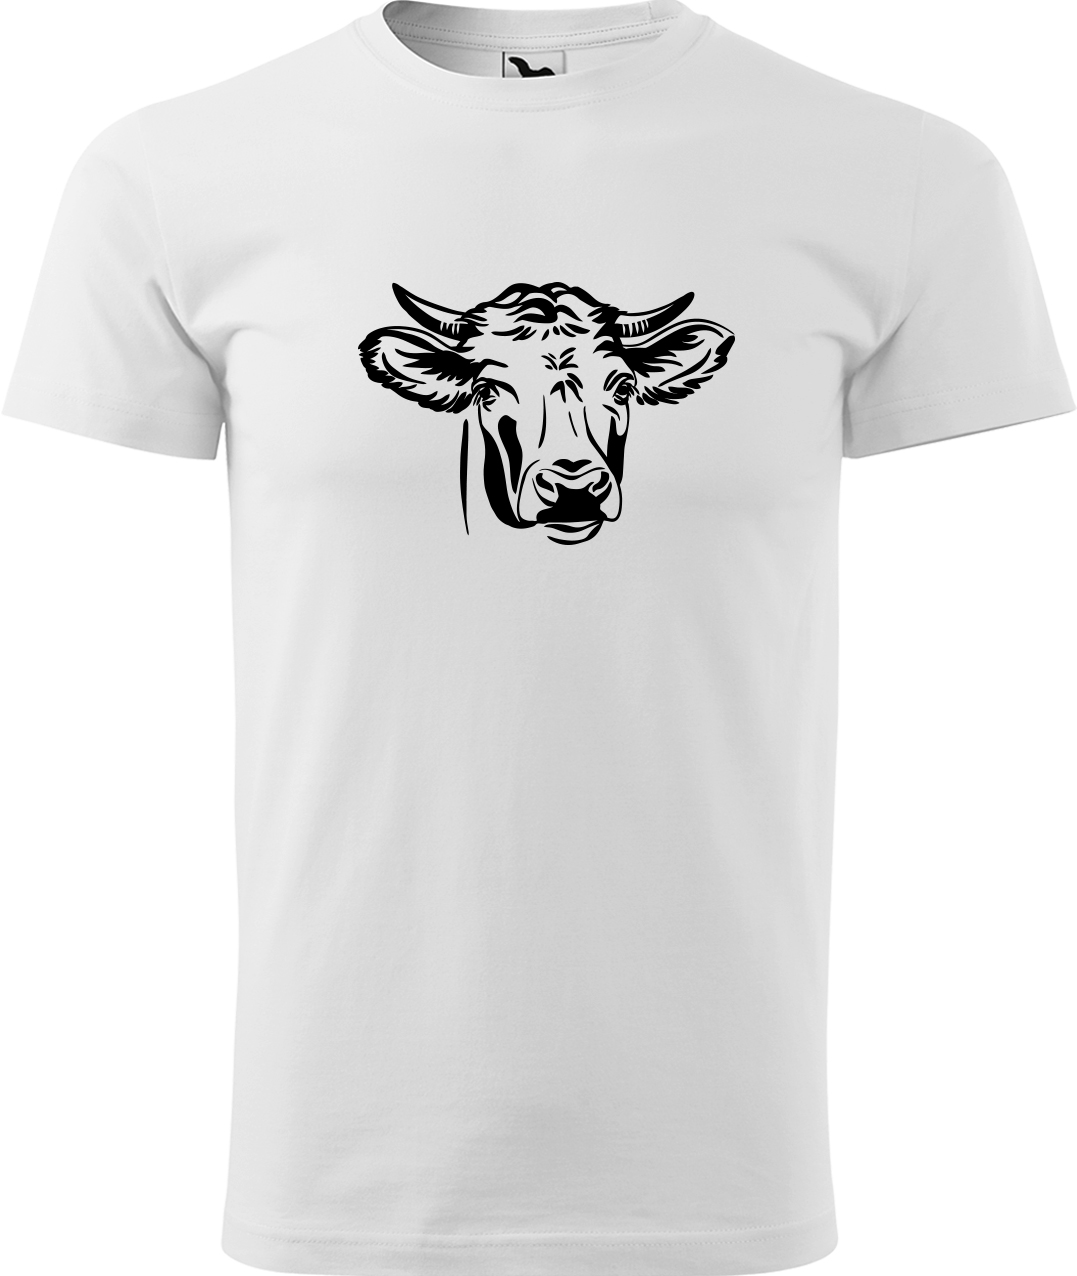 Pánské tričko s krávou - Hlava krávy Velikost: M, Barva: Bílá (00), Střih: pánský